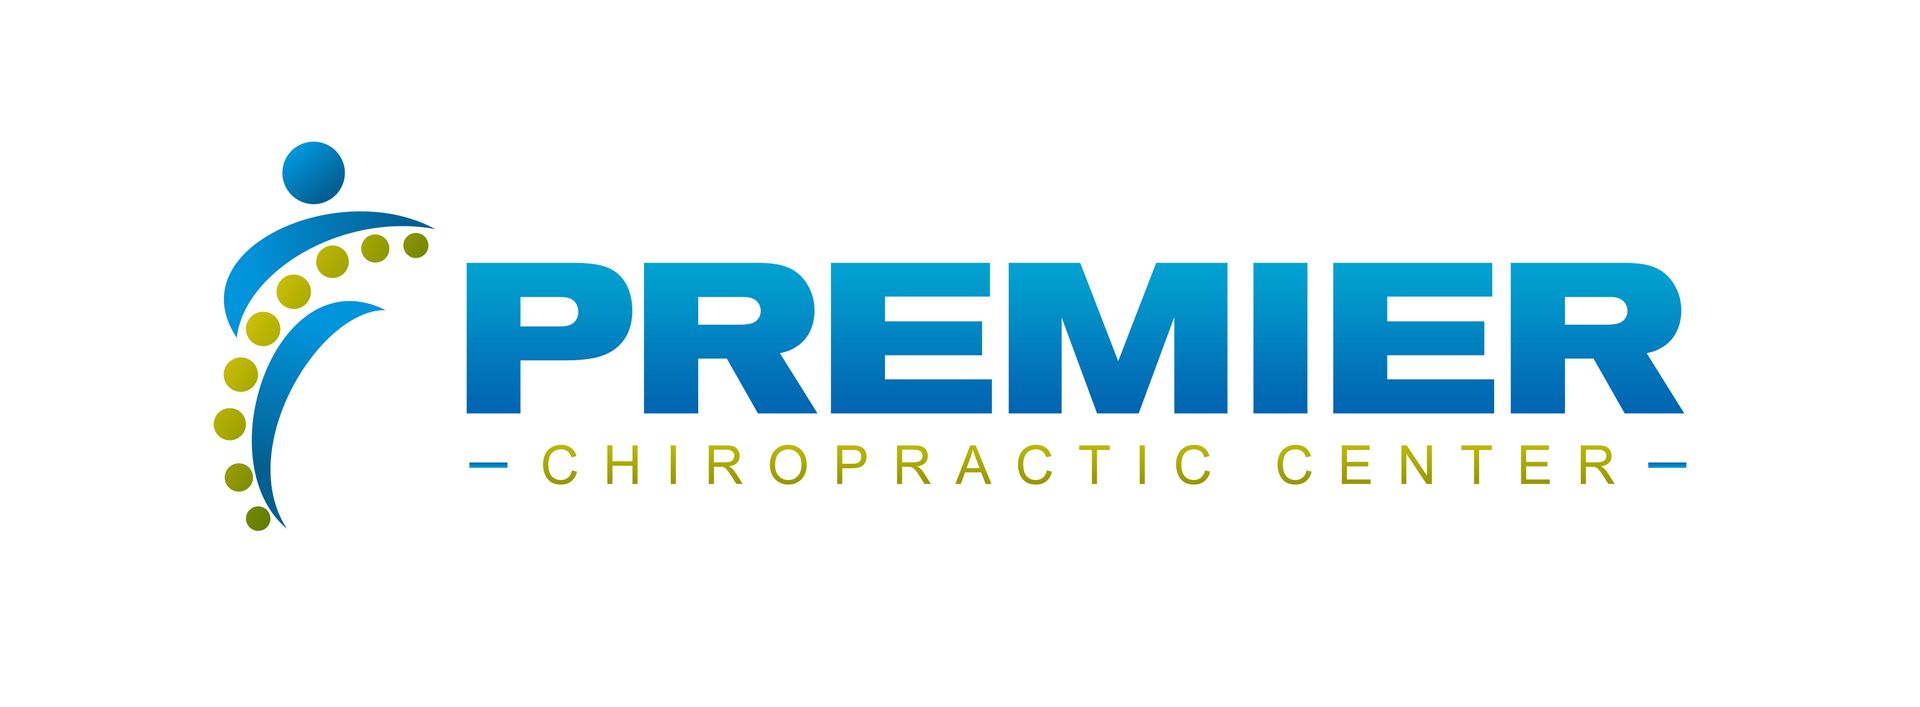 Premier Chiropractic Centers - Logo